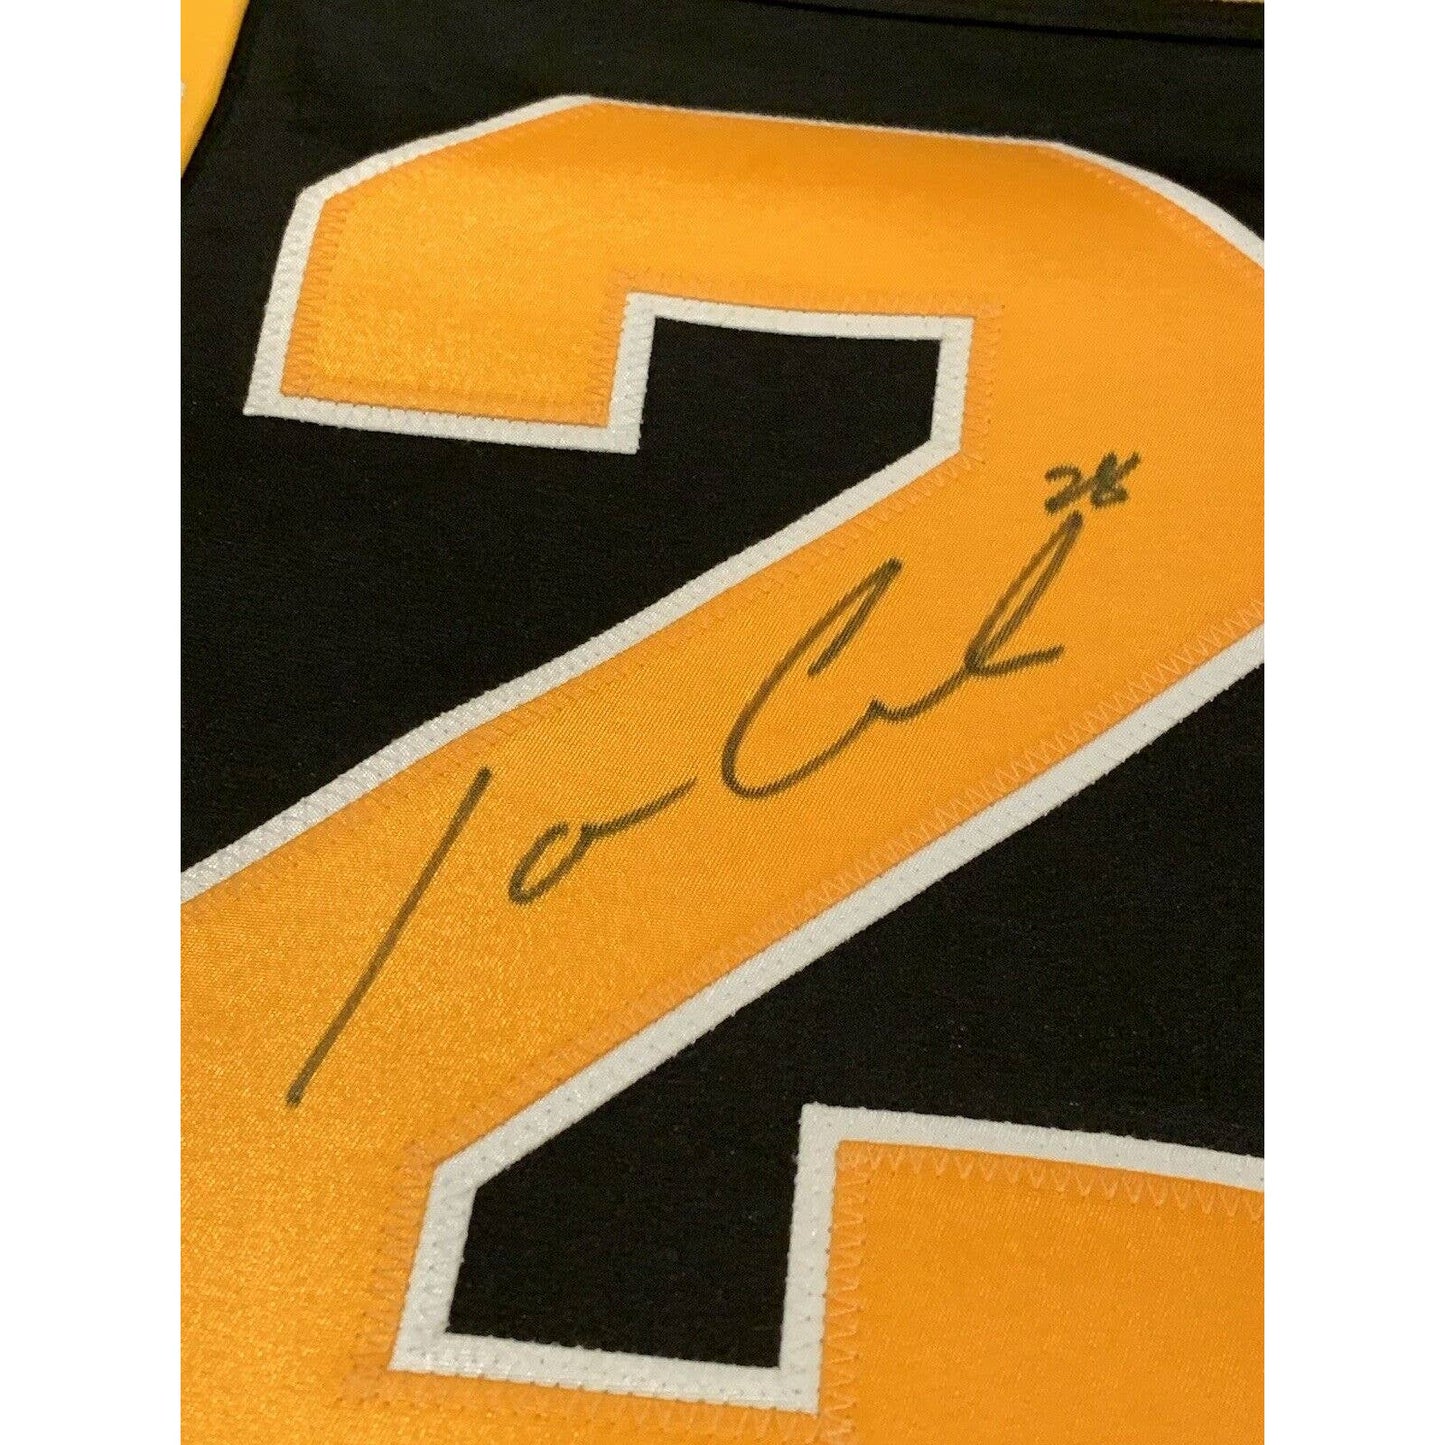 Ian Cole Autographed/Signed Jersey Beckett COA Pittsburgh Penguins - TreasuresEvolved